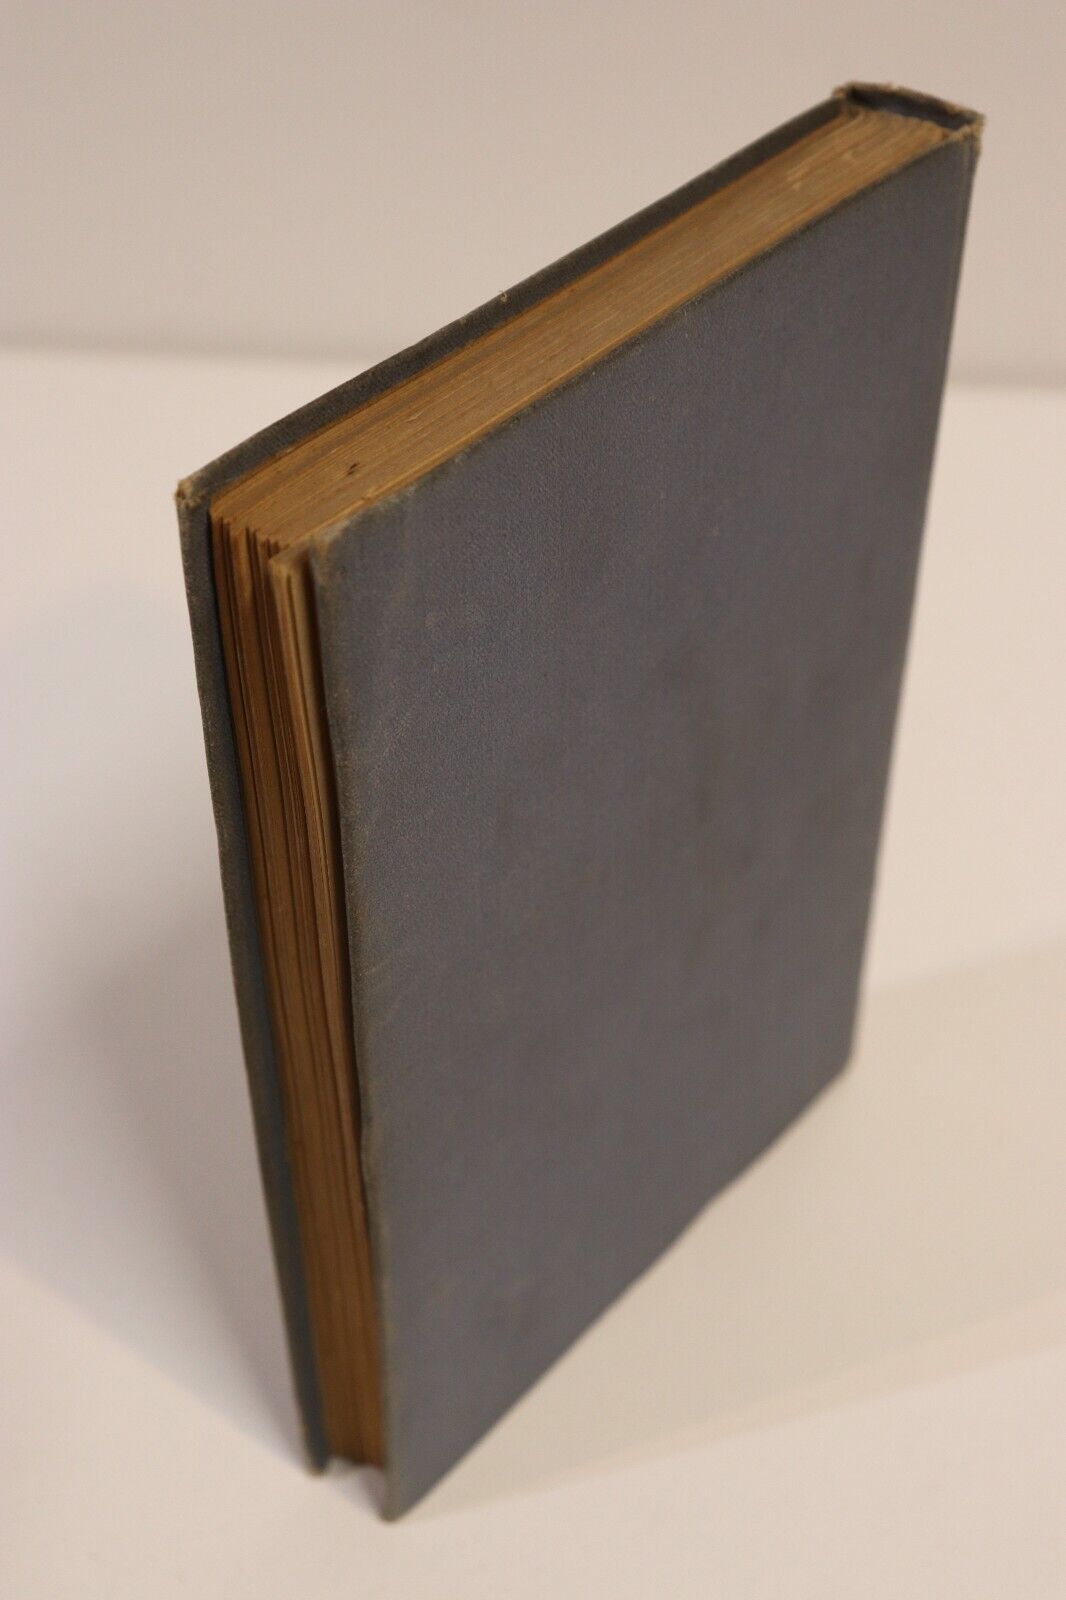 Morley's Library: Izaak Walton's Lives - 1888 - Antique British History Book